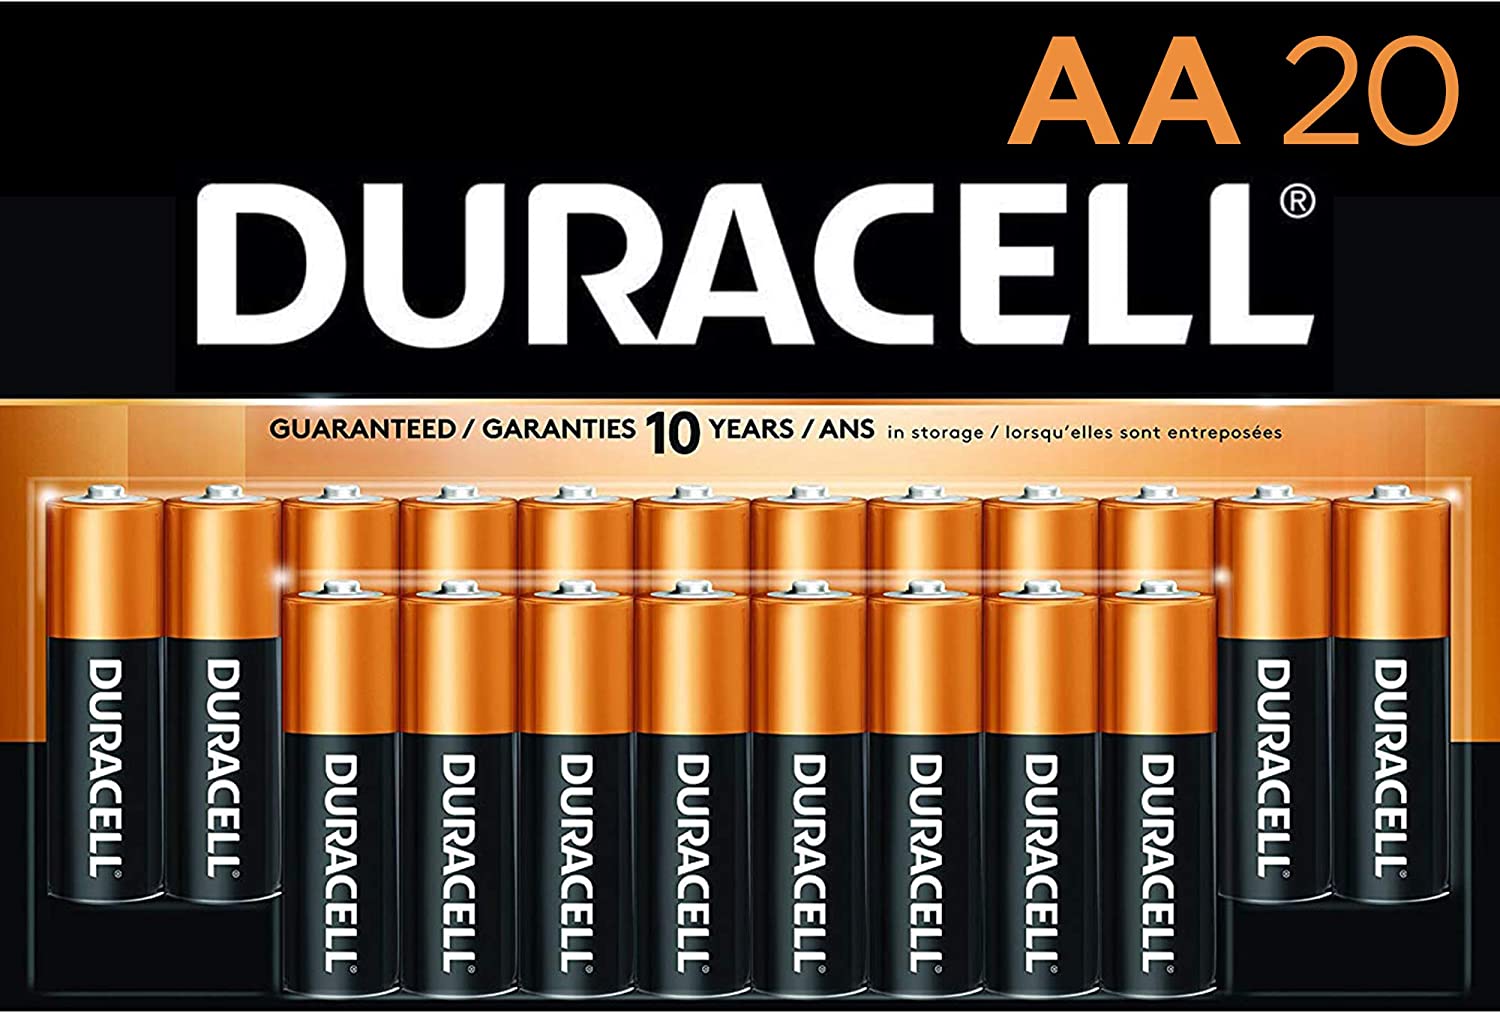 Duracell CopperTop Alkaline AA Batteries, 20-Count